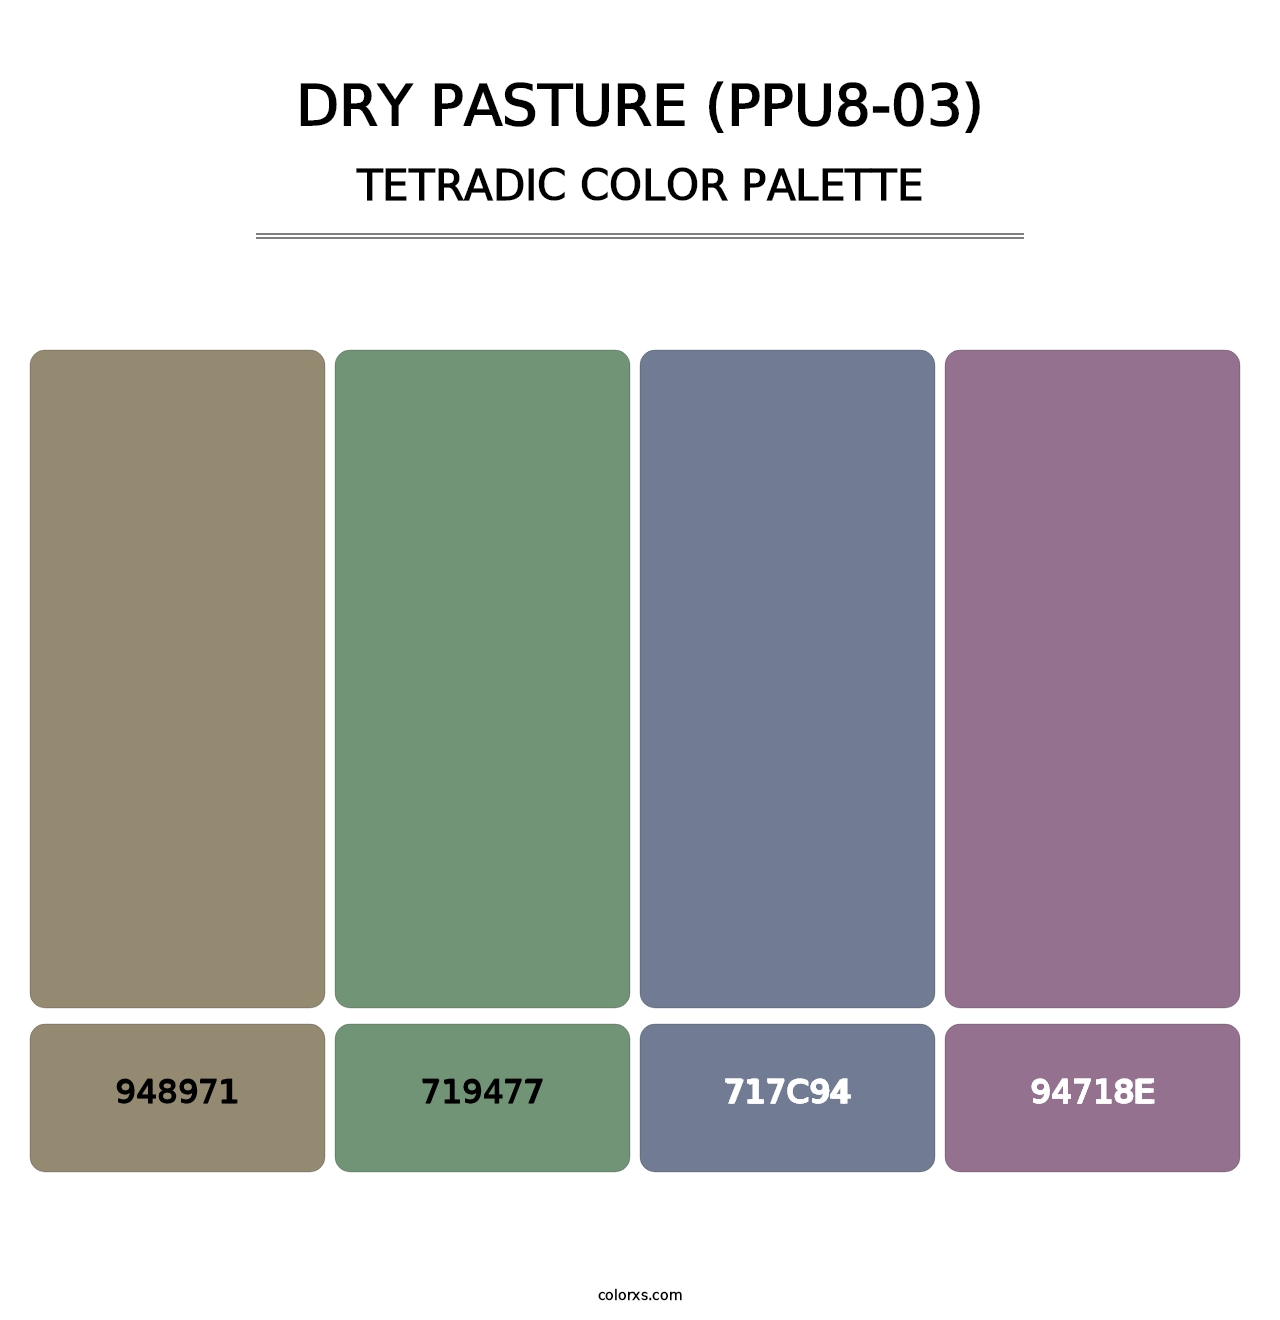 Dry Pasture (PPU8-03) - Tetradic Color Palette